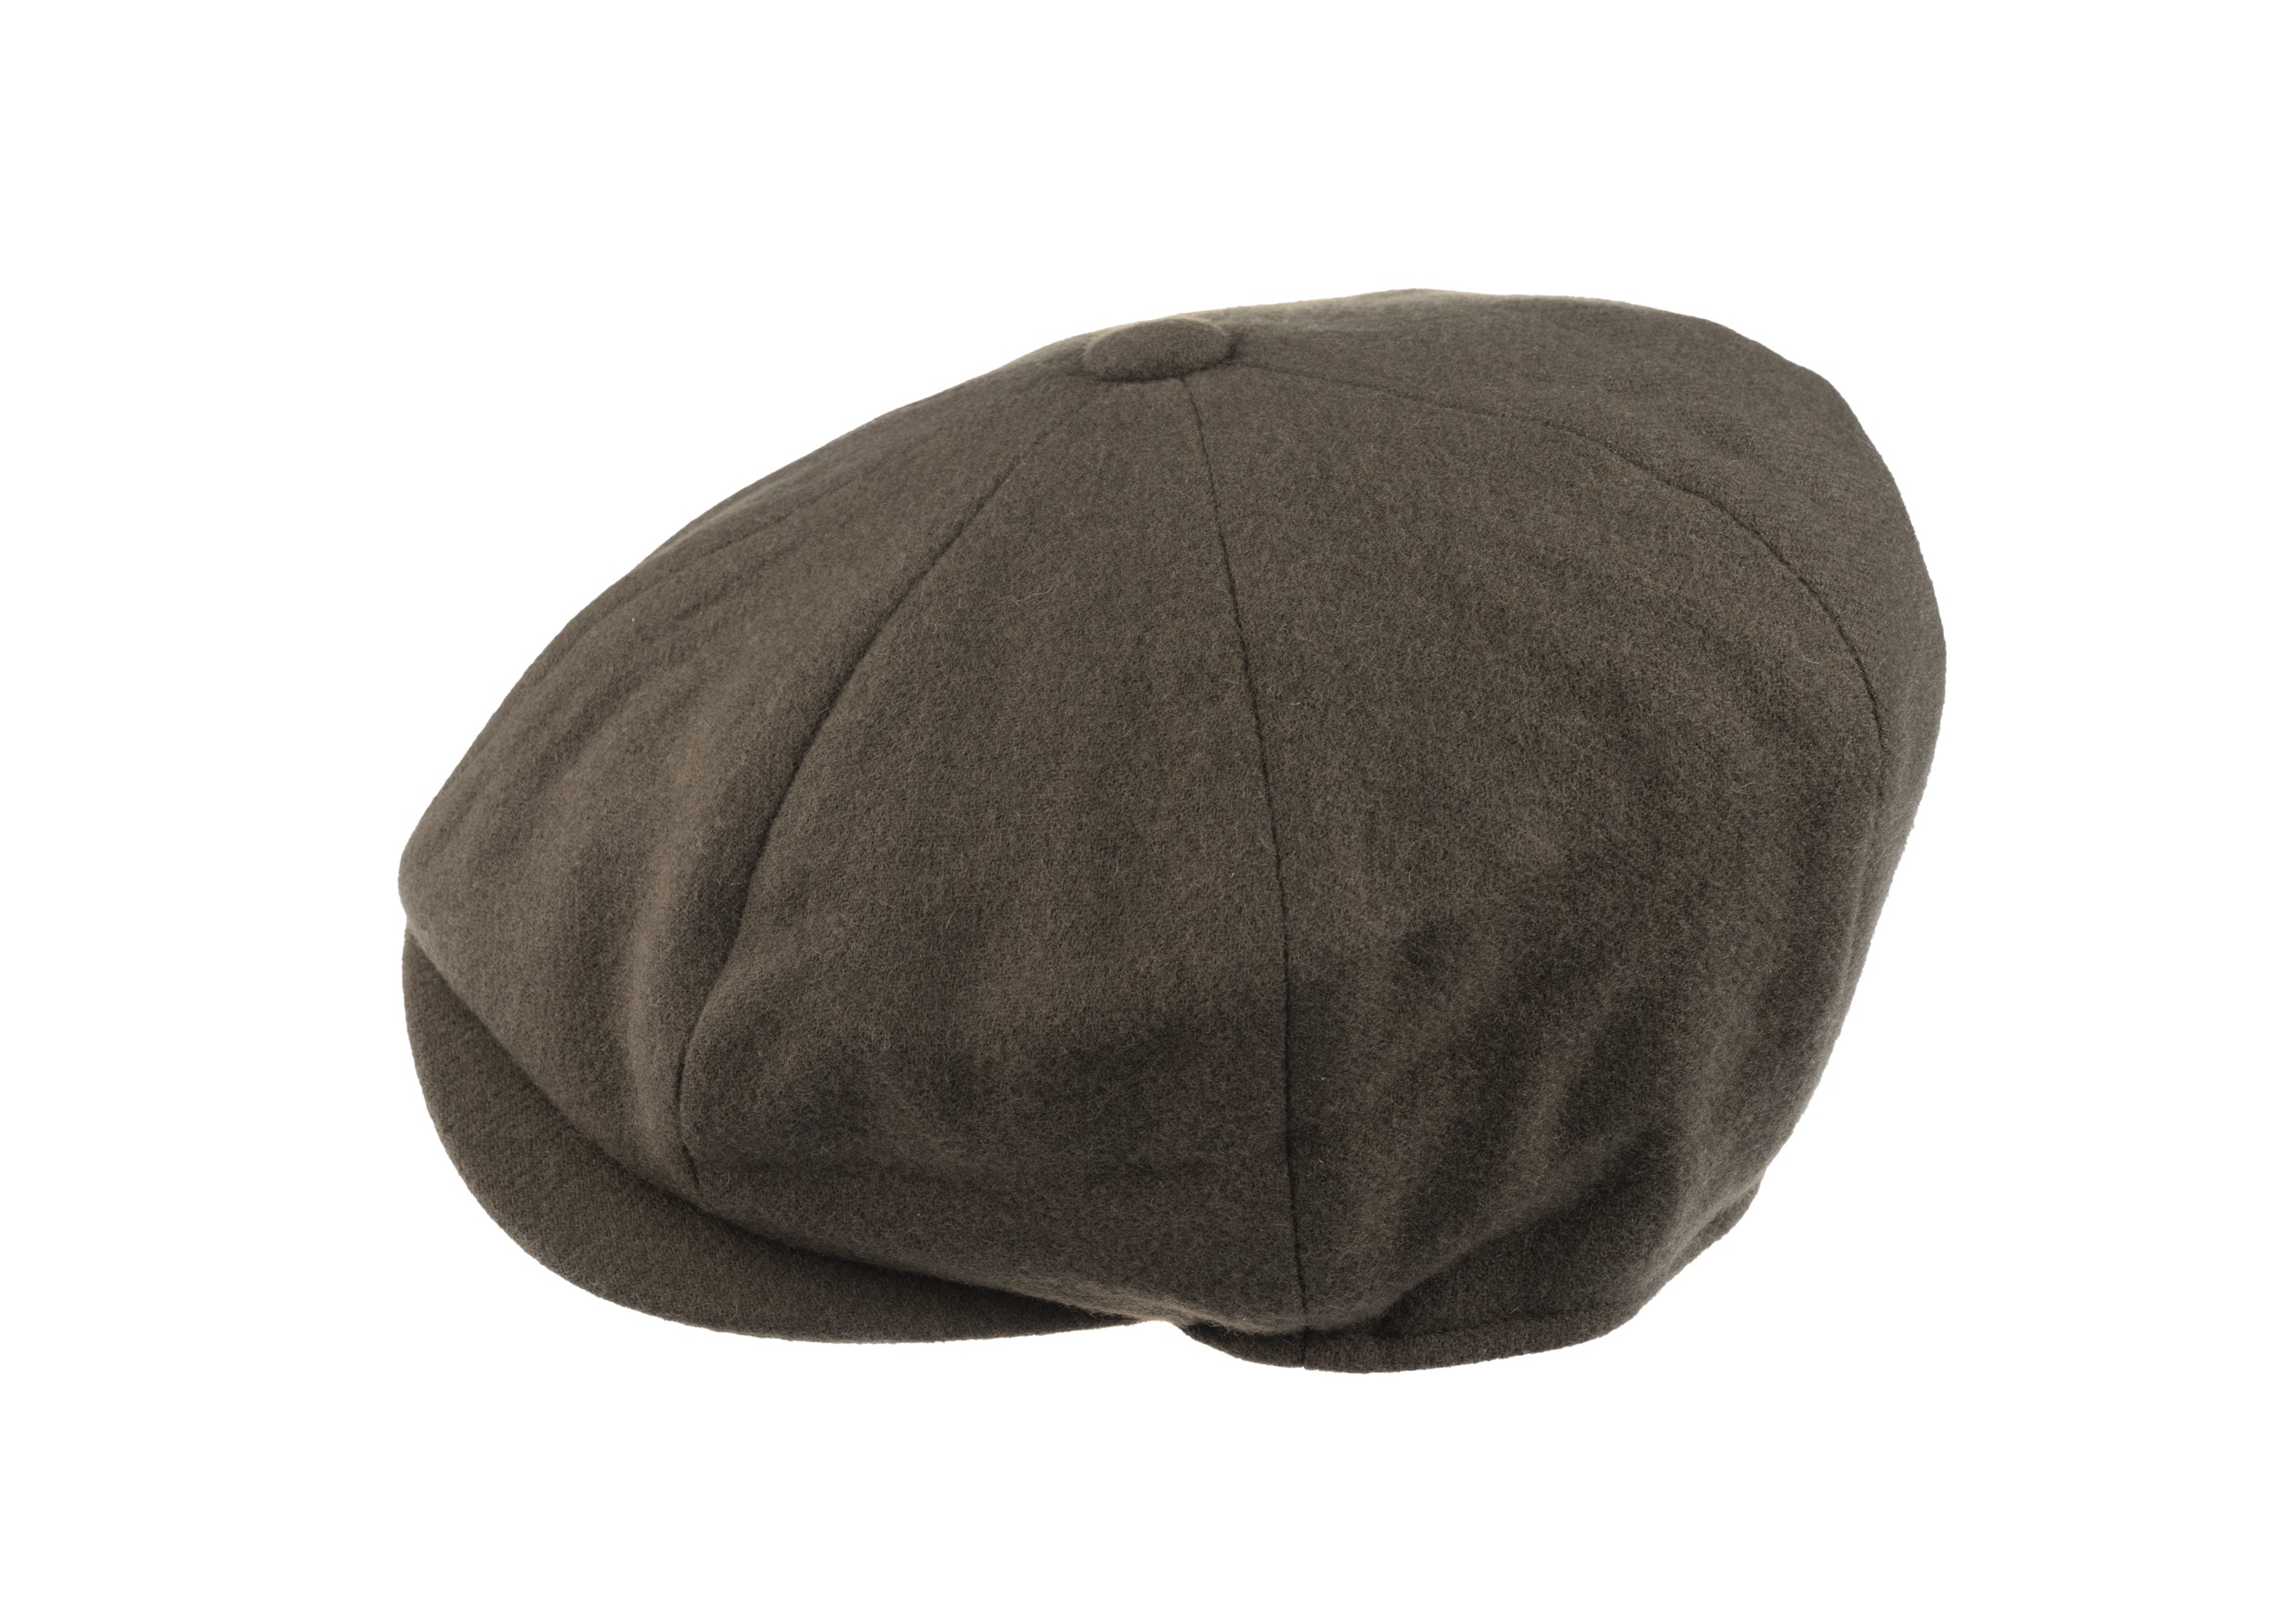 Josh 8 piece baker boy cap in cashmere/wool blend fabric in Khaki